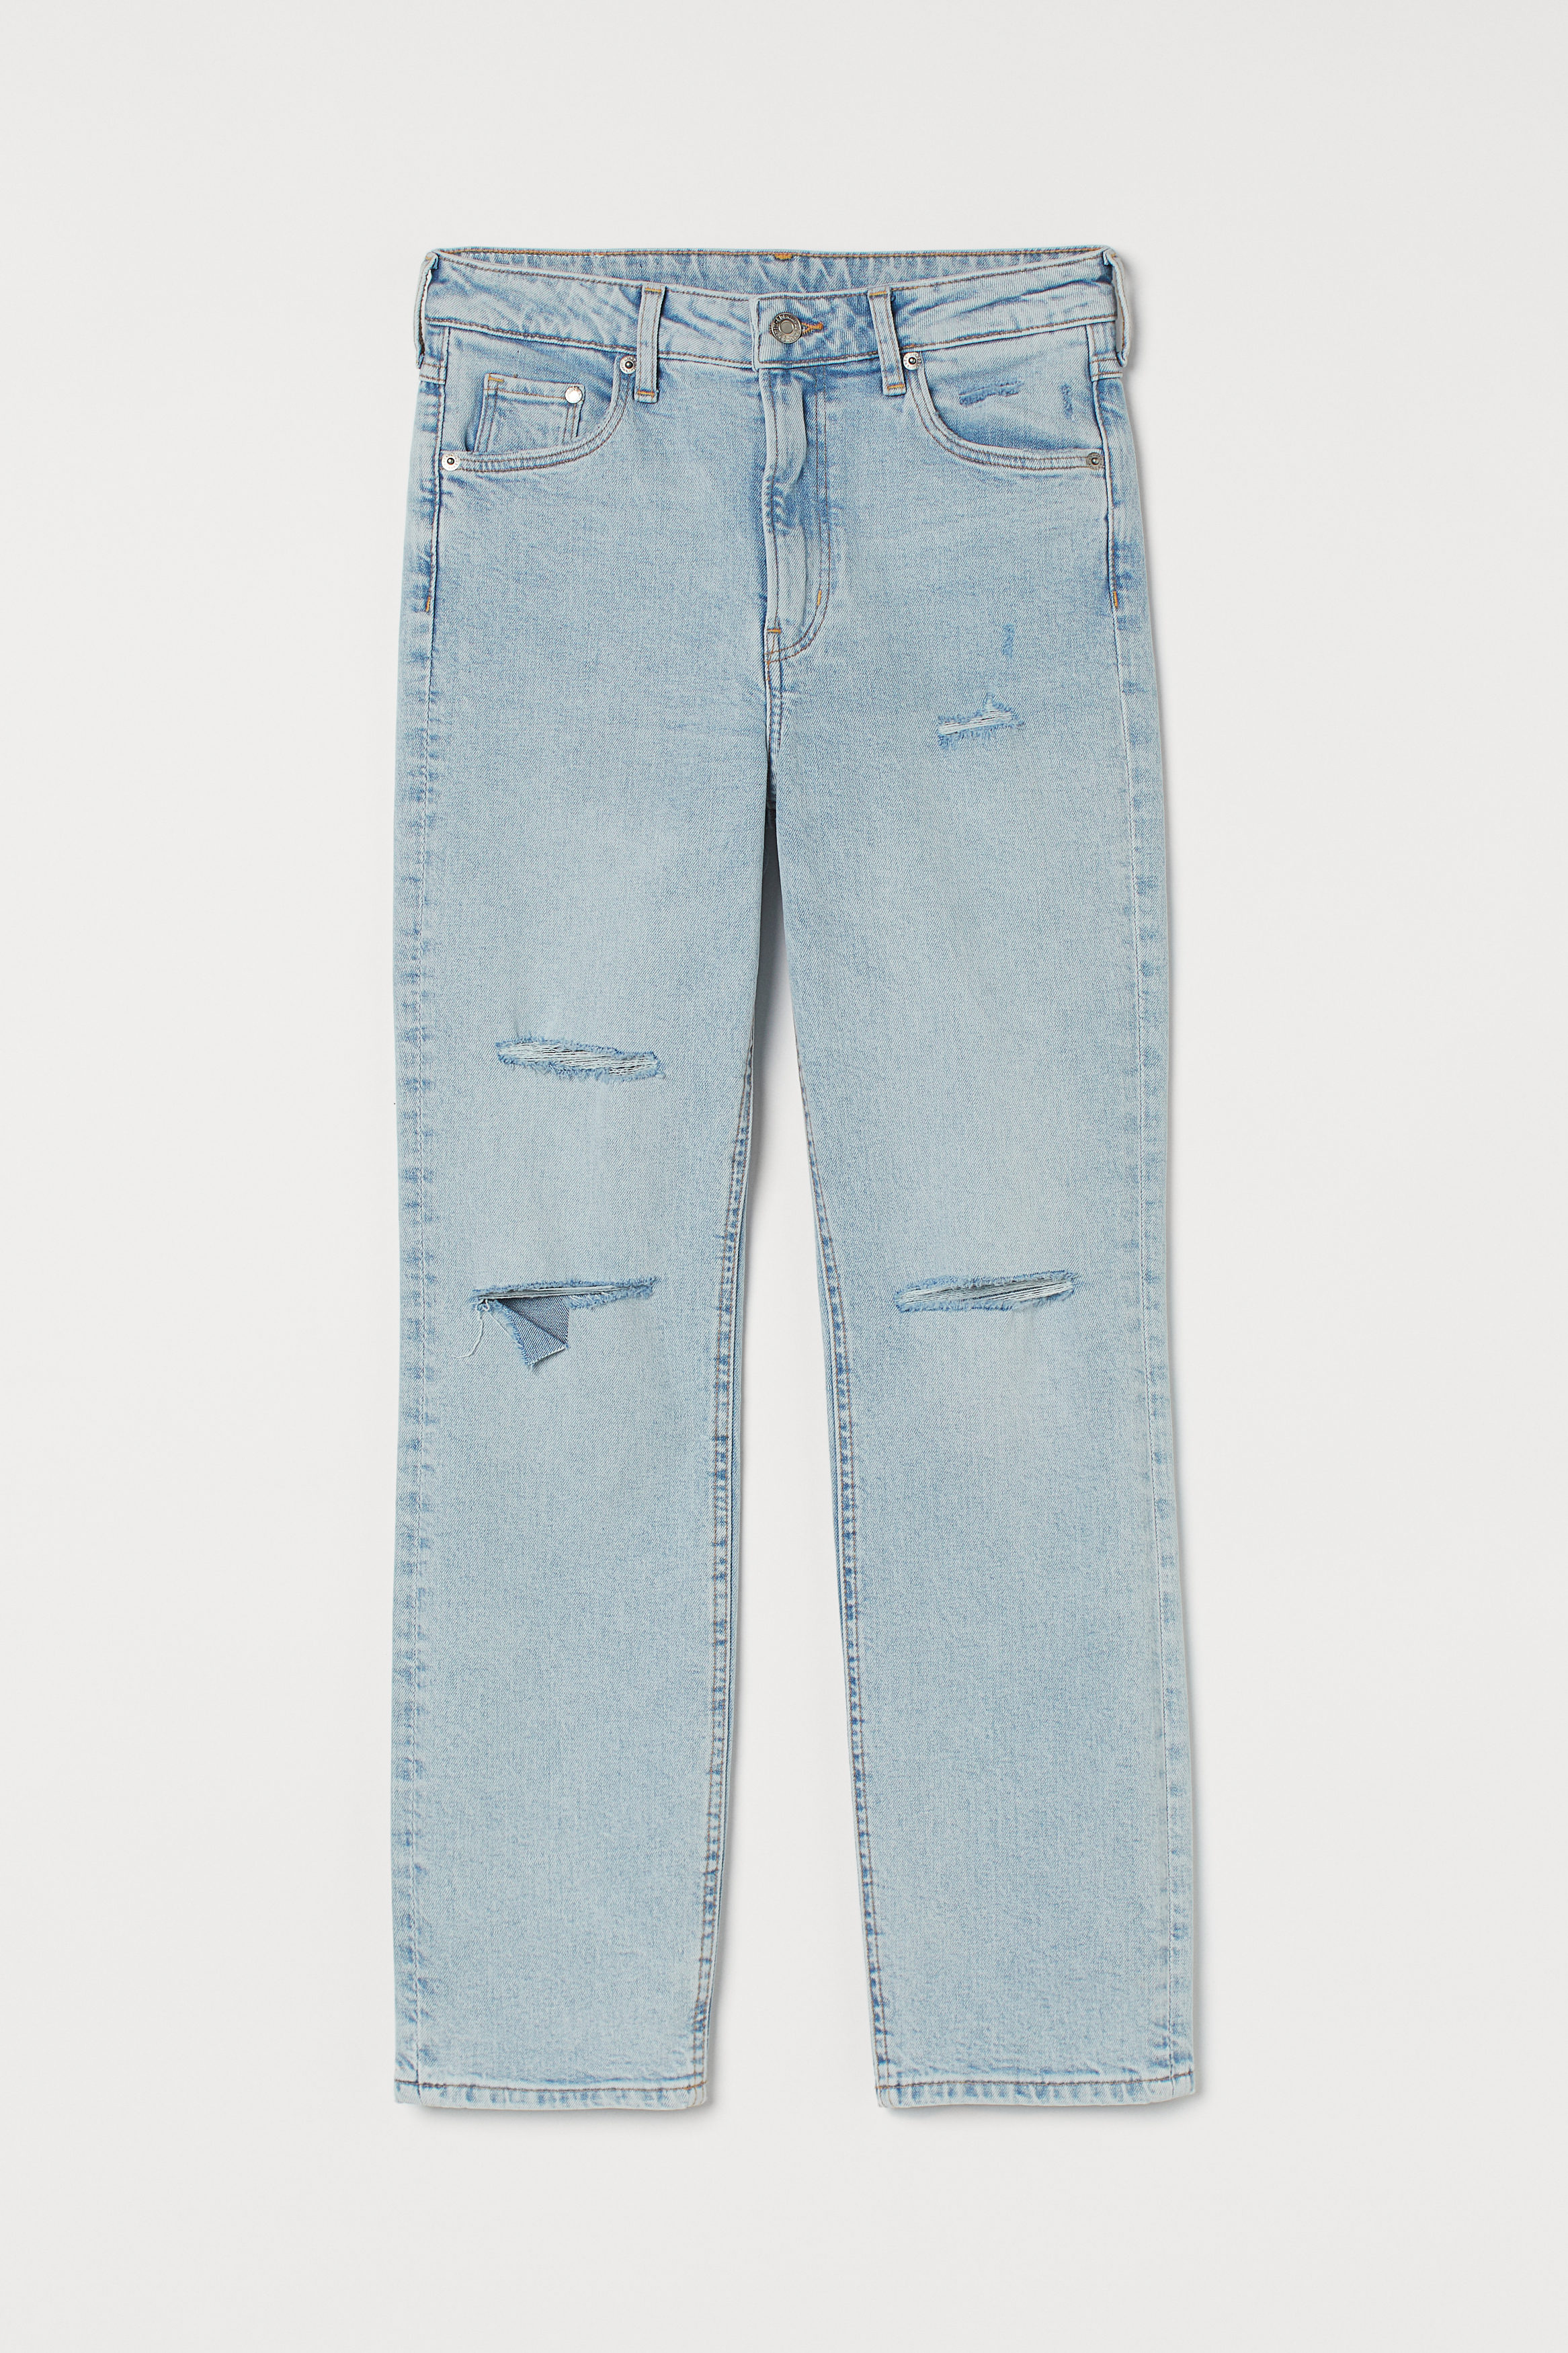 WOMEN FASHION Jeans Boyfriend jeans Embroidery H&M boyfriend jeans Multicolored 38                  EU discount 77% 